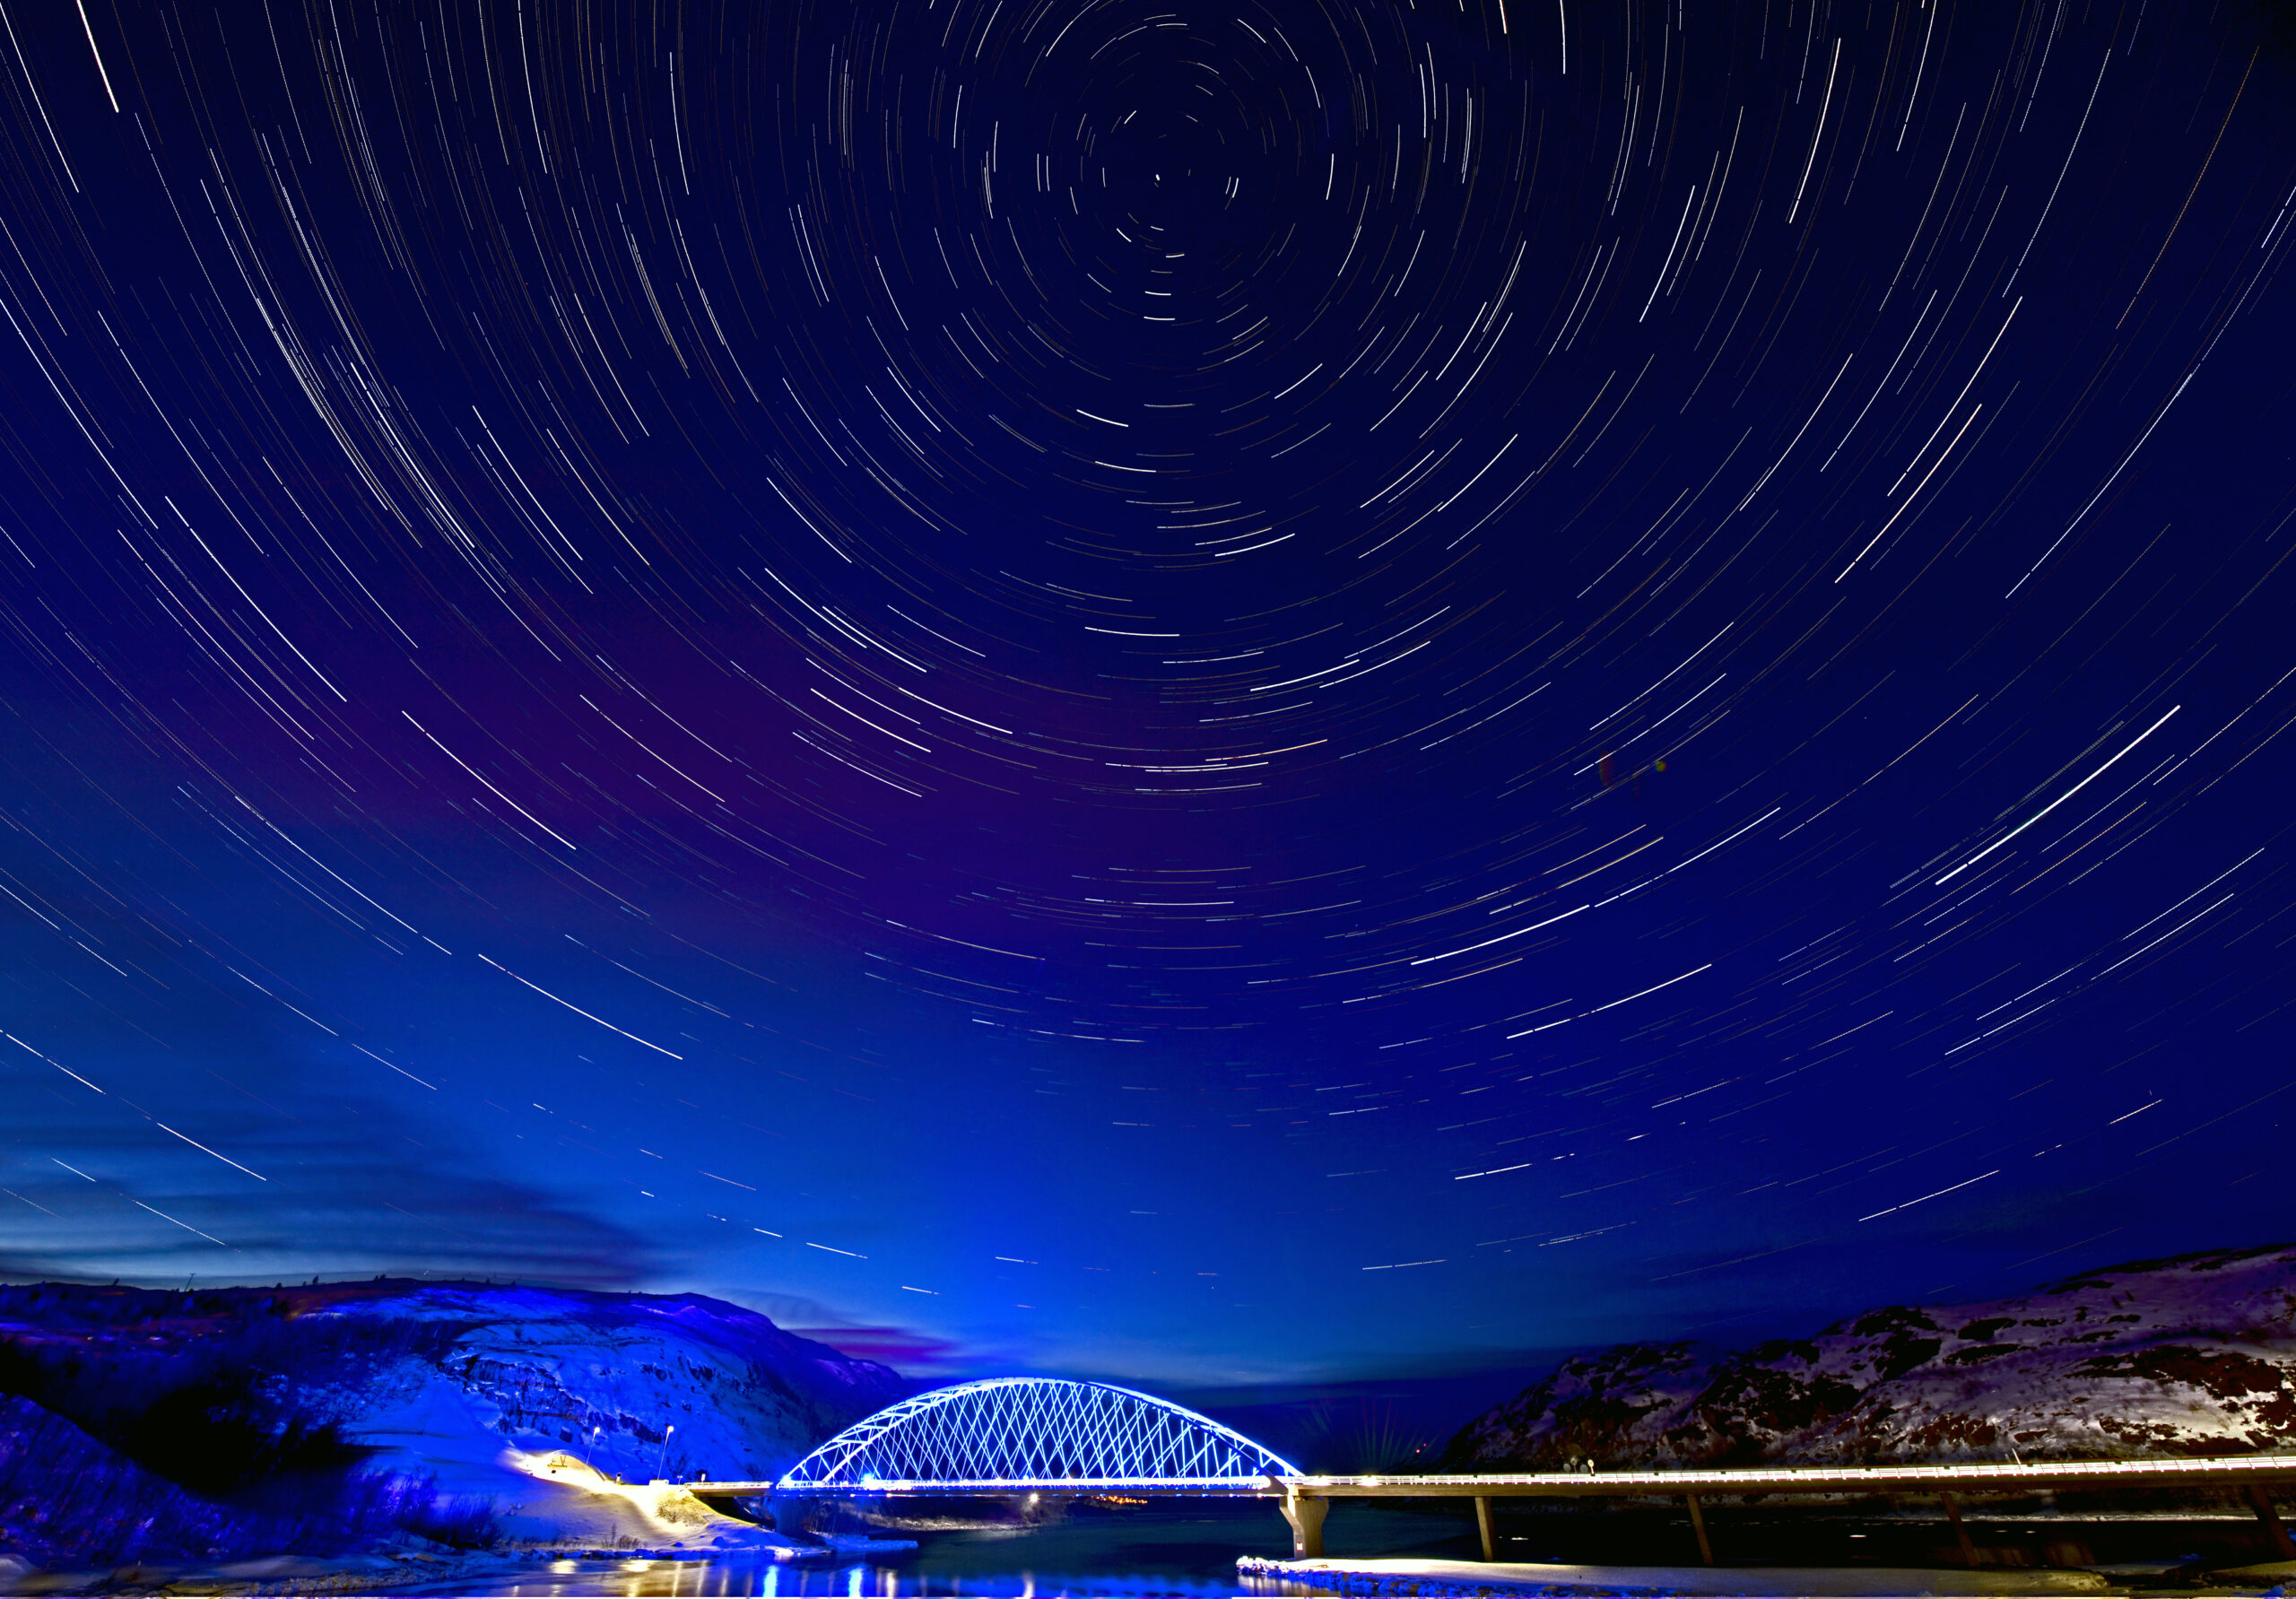 dark blue sky with stars and a small bridge